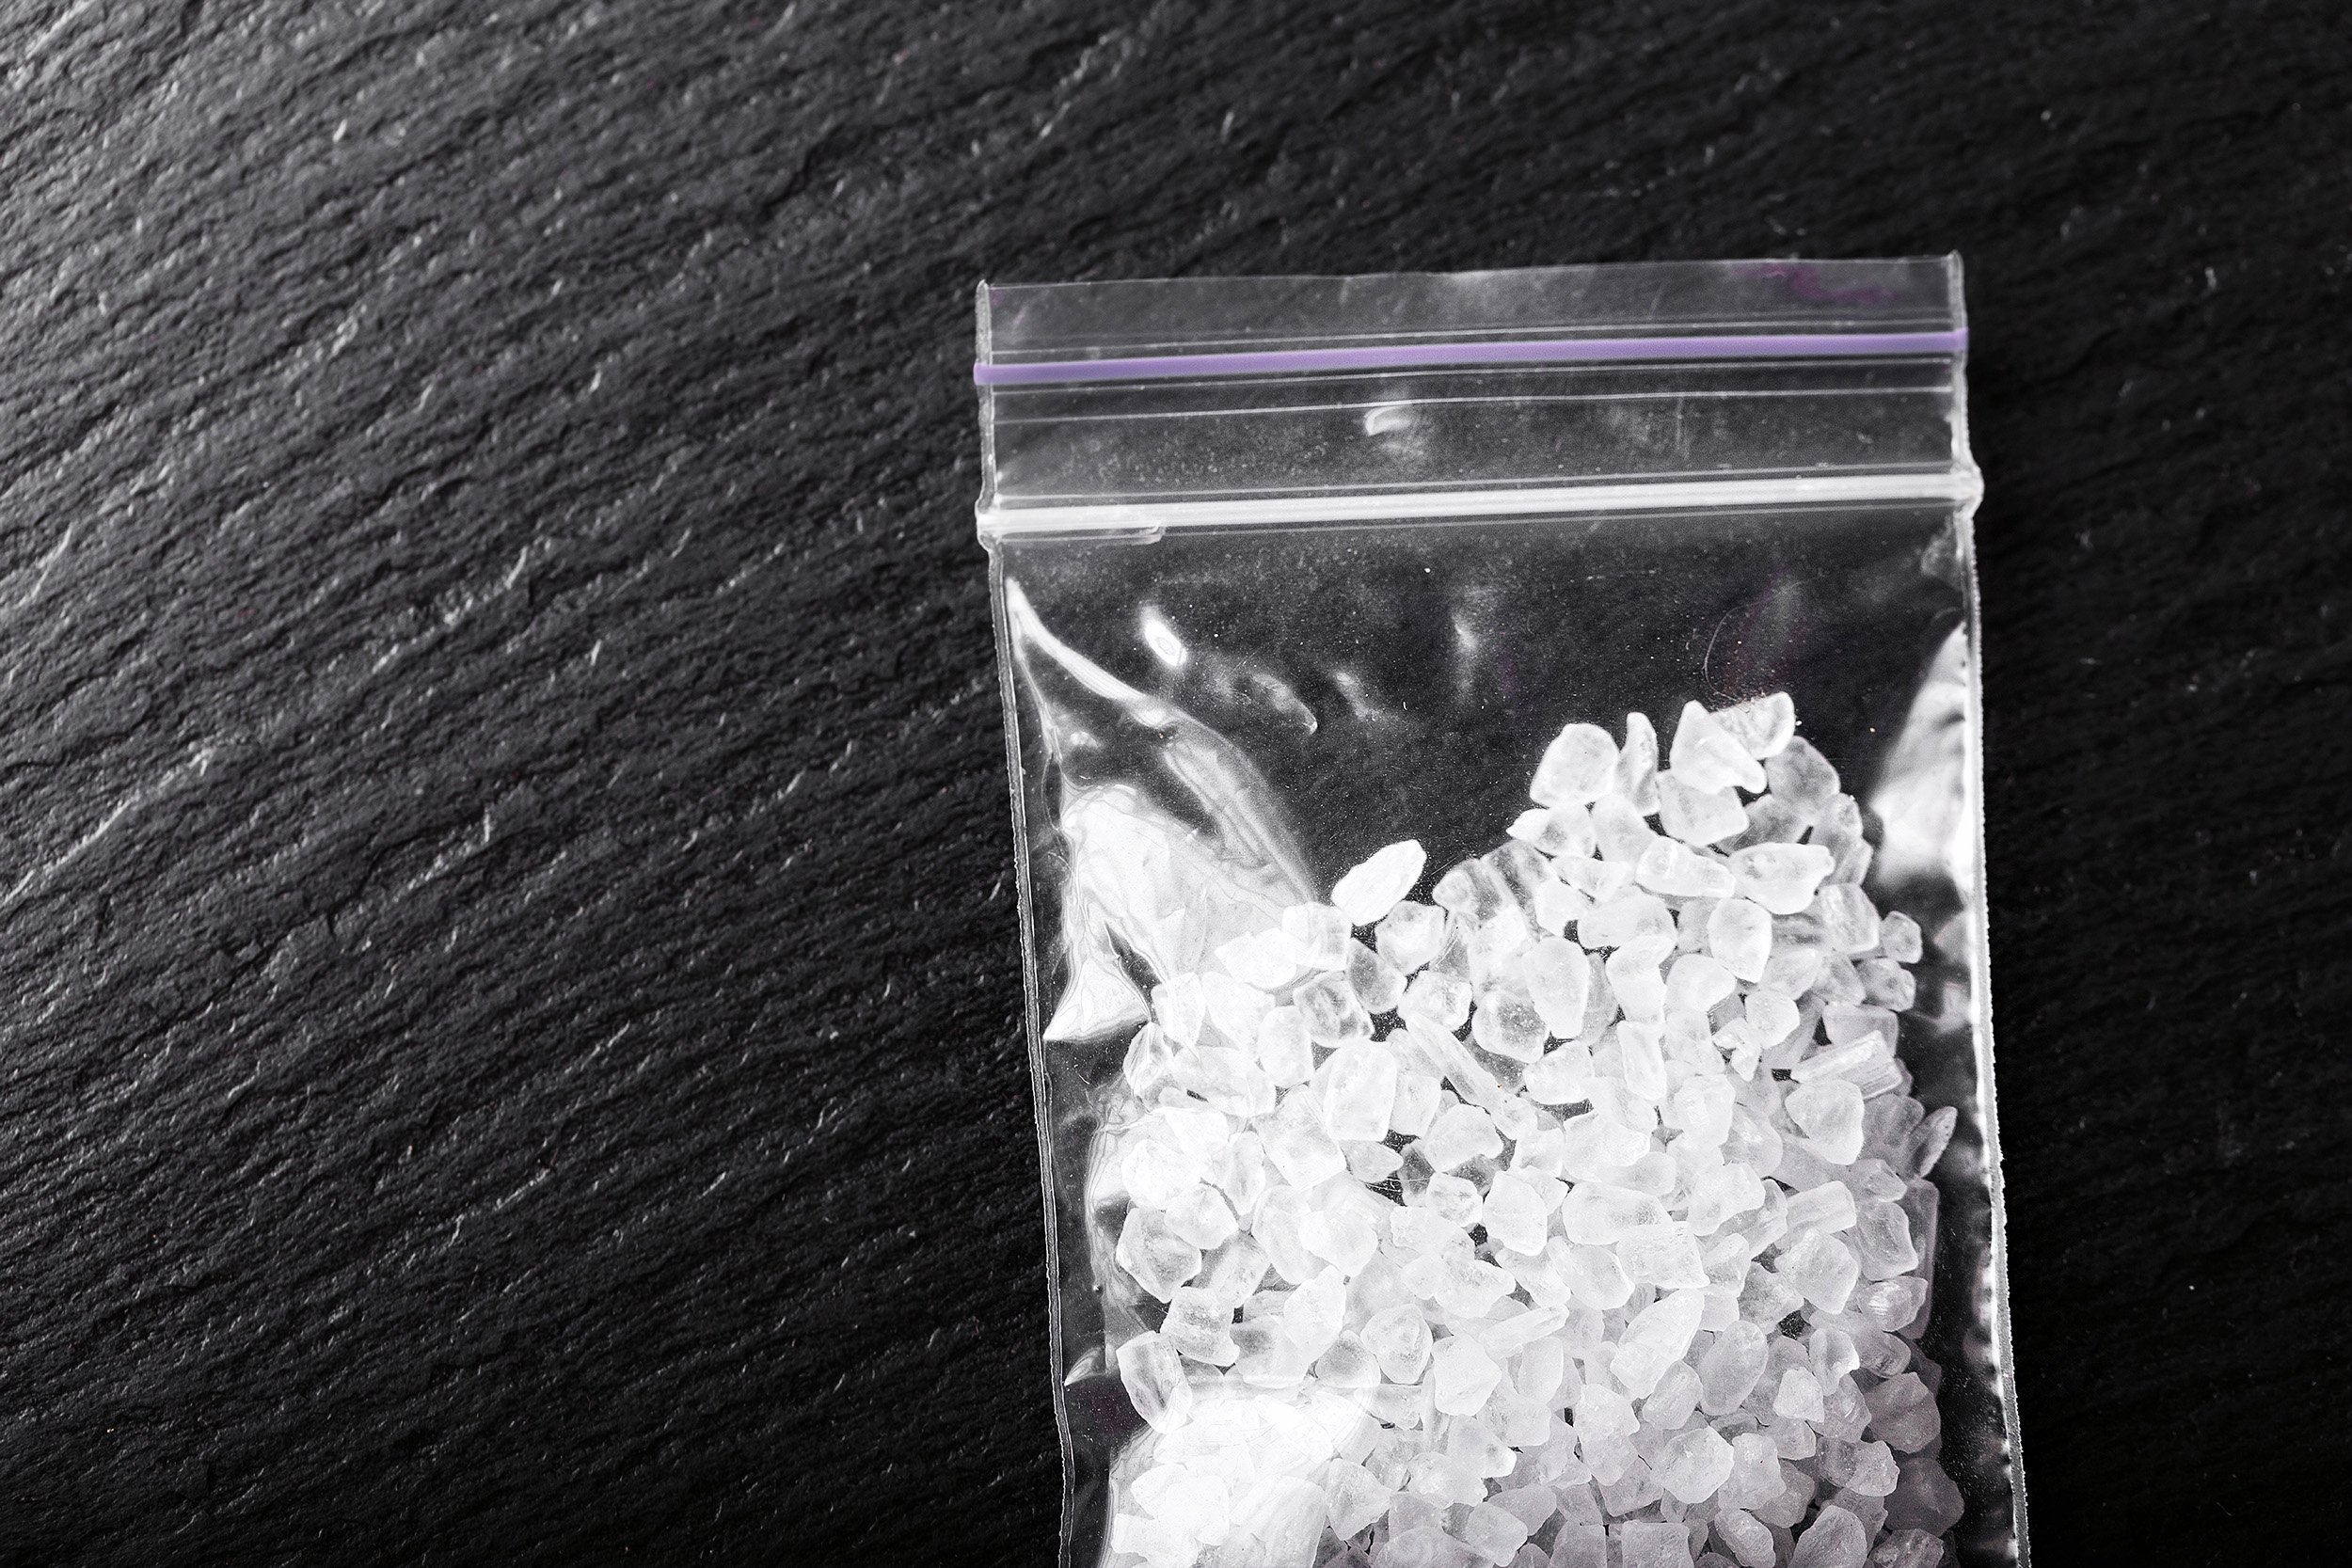 a bag of methamphetamine